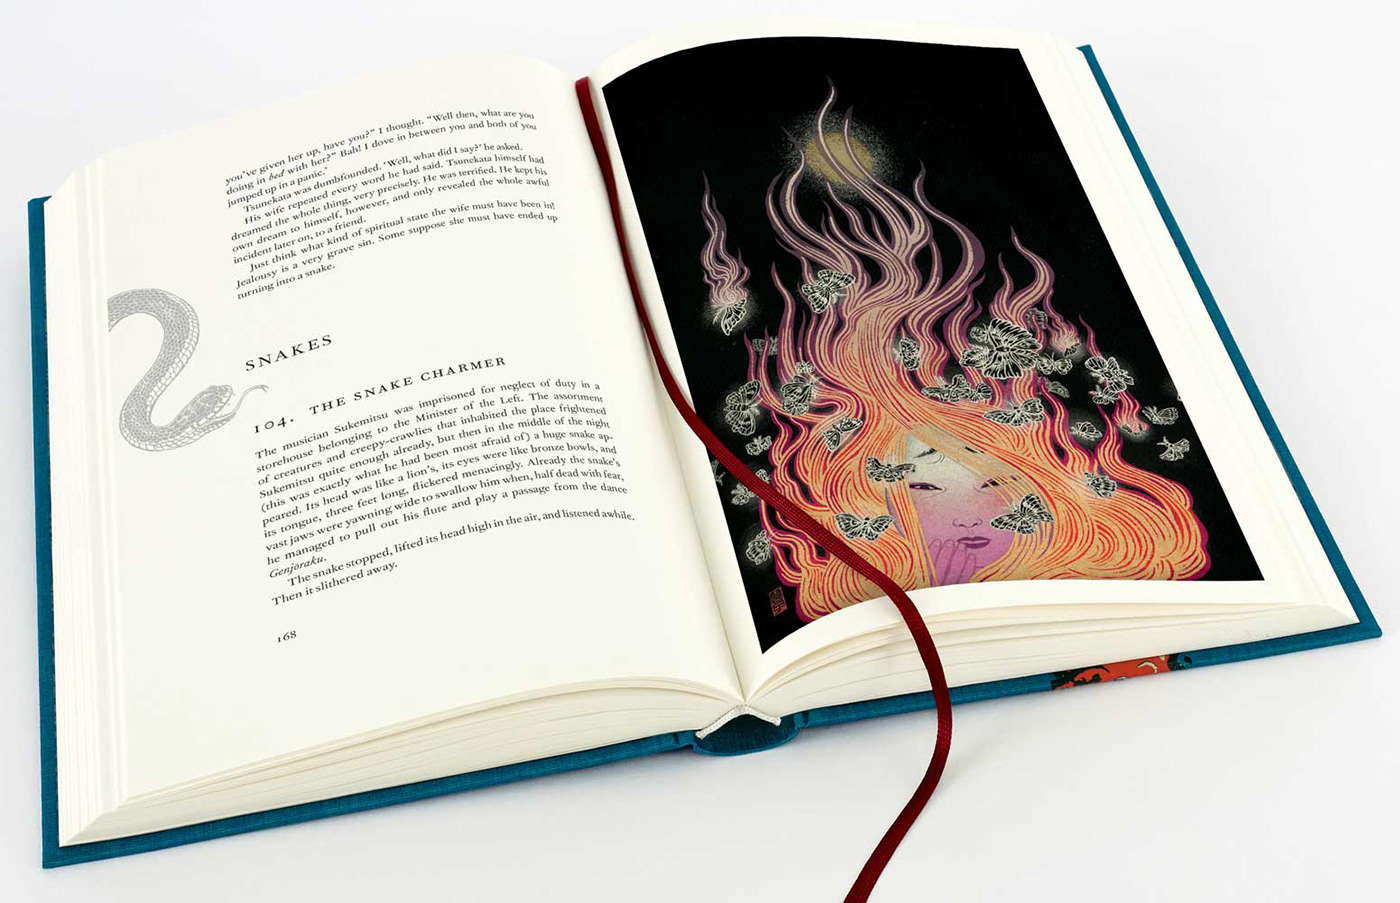 japan ILLUSTRATION  asia book design